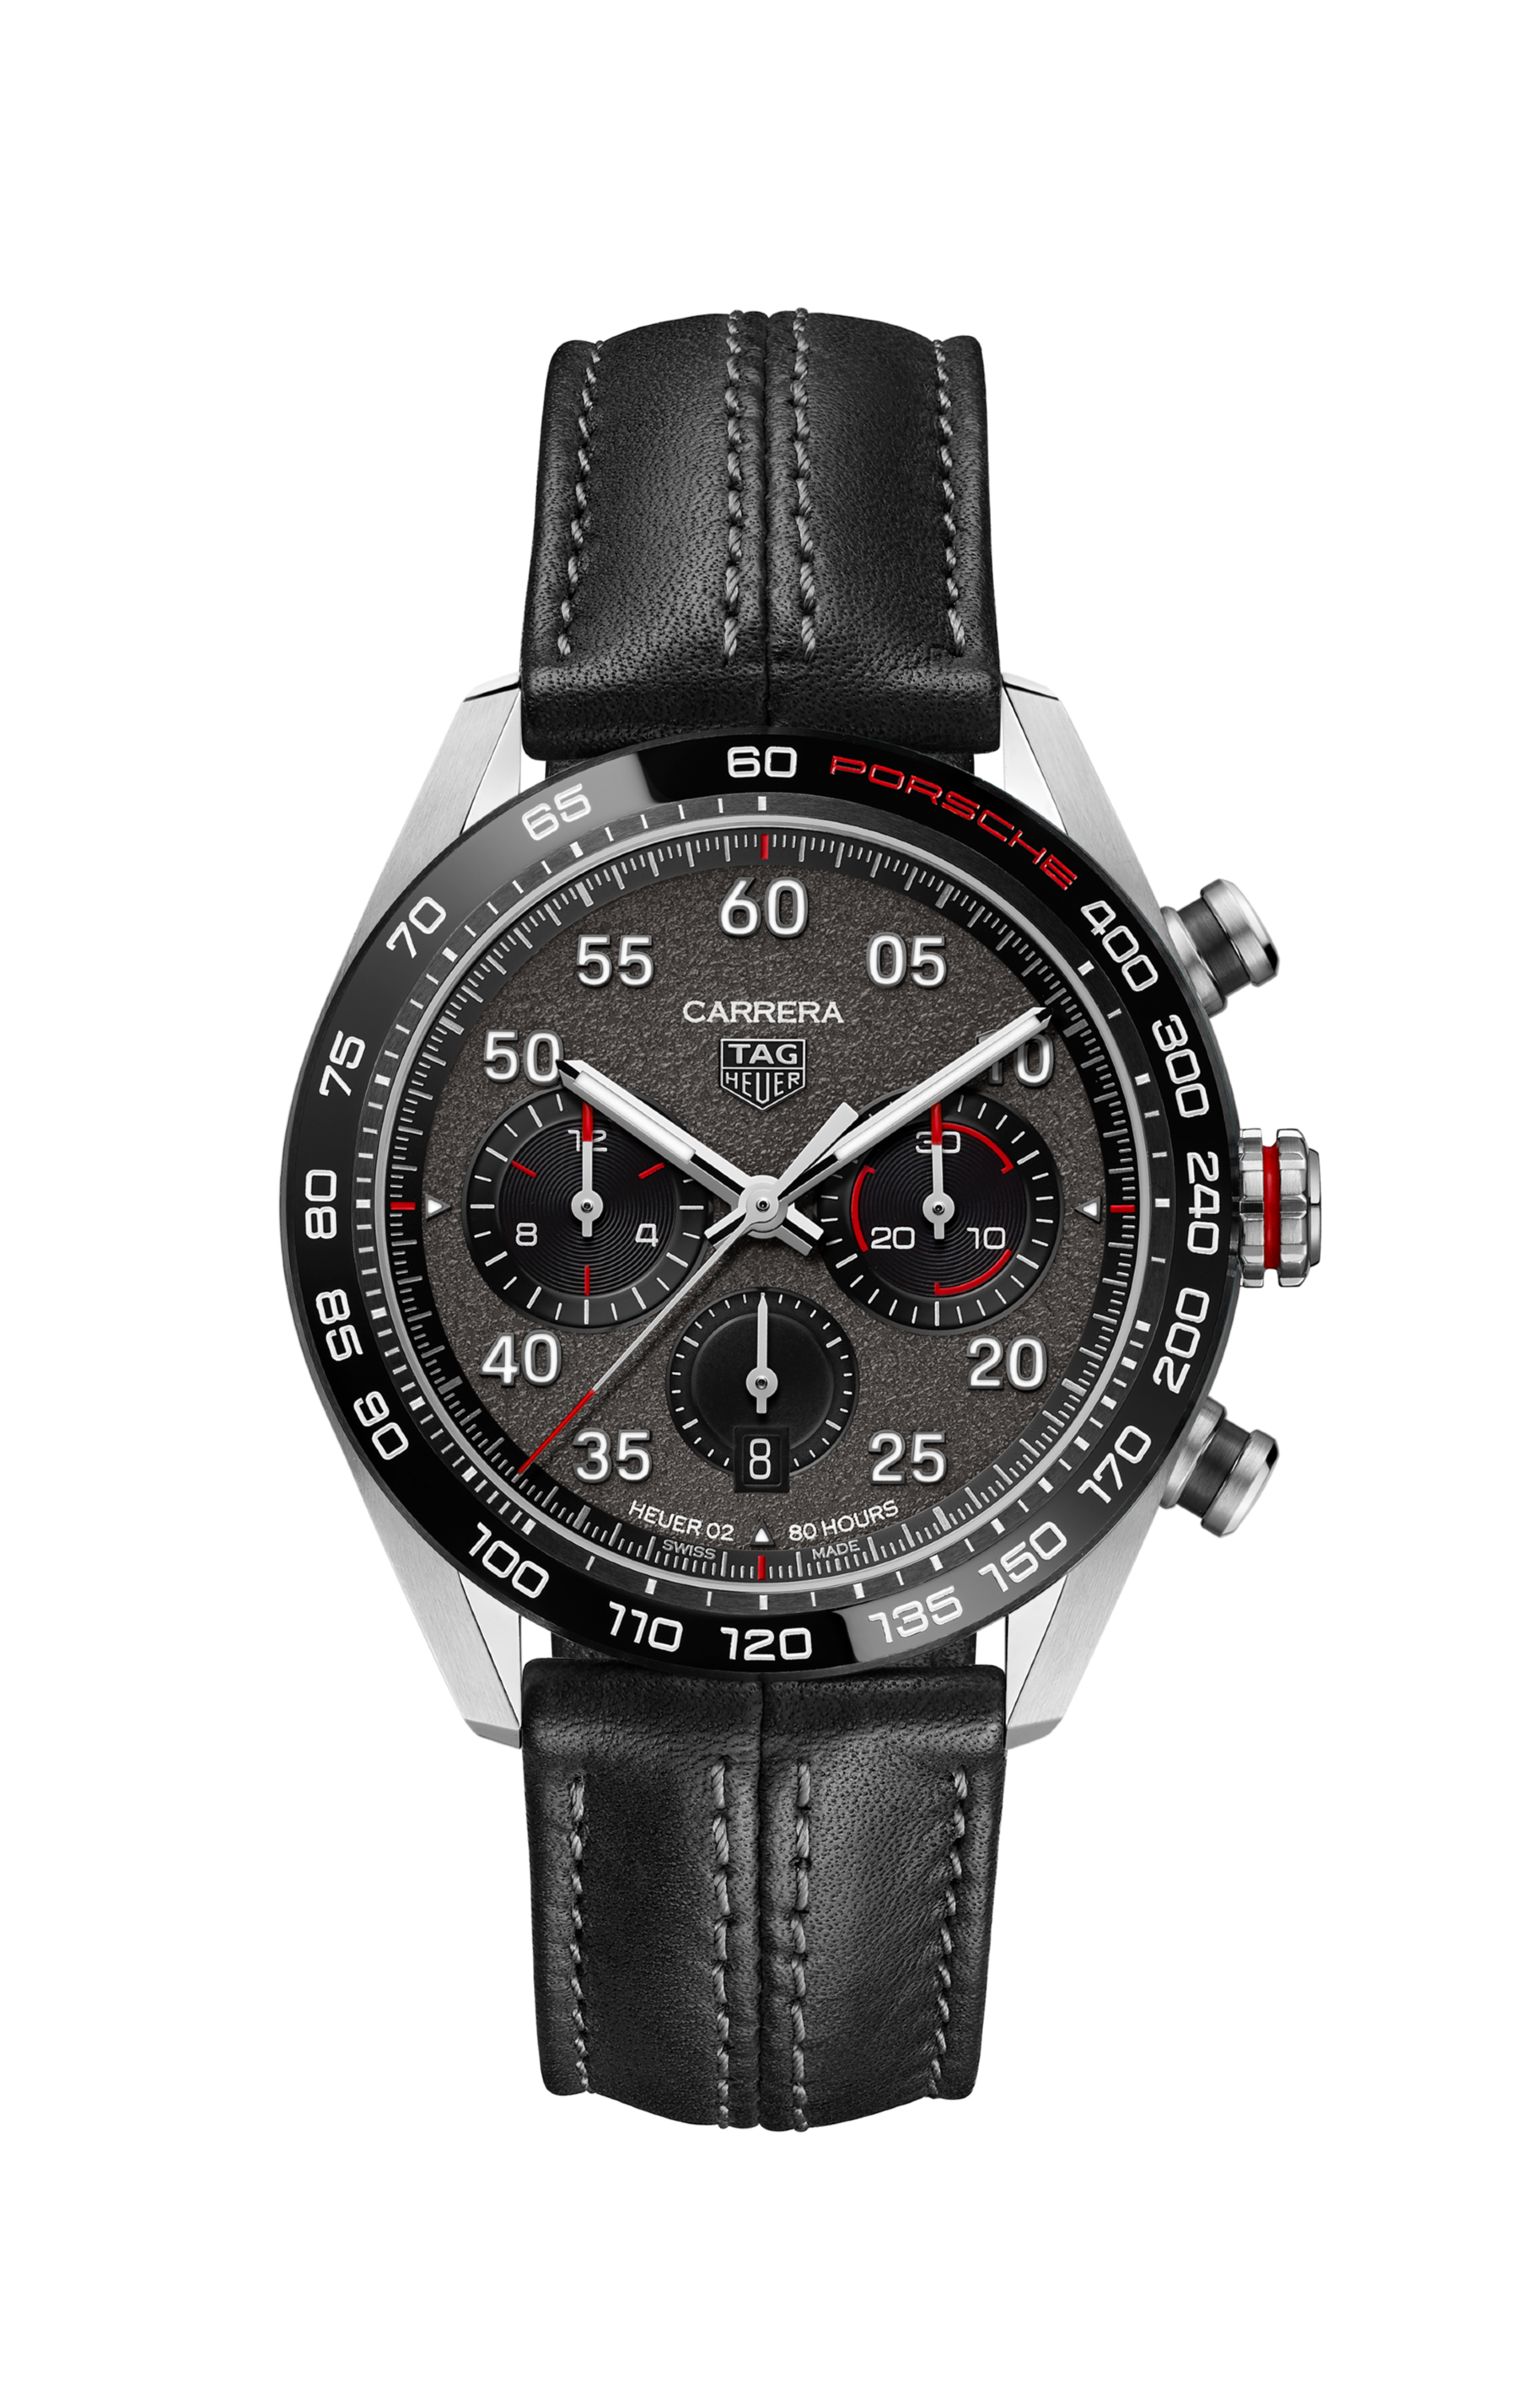 Часы TAG Heuer Carrera Porsche Chronograph, TAG Heuer